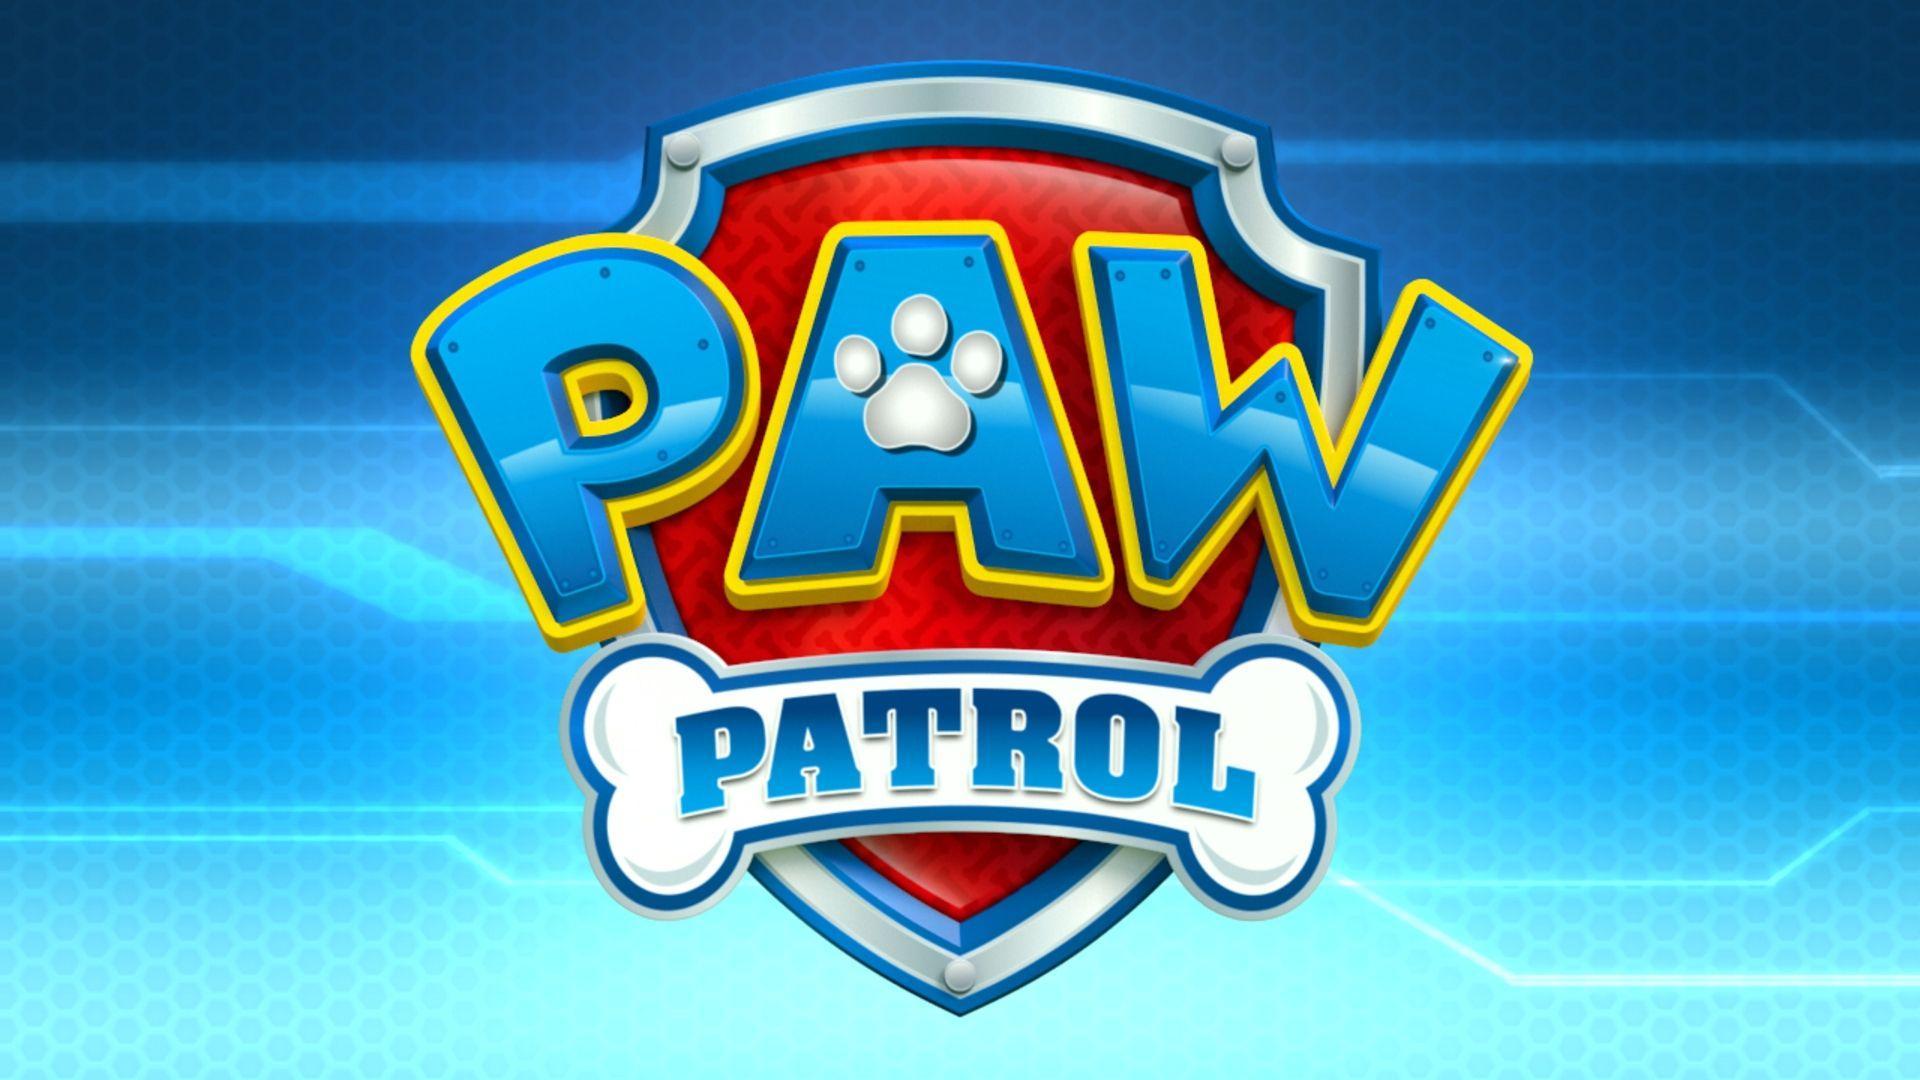 15-mandala-paw-patrol